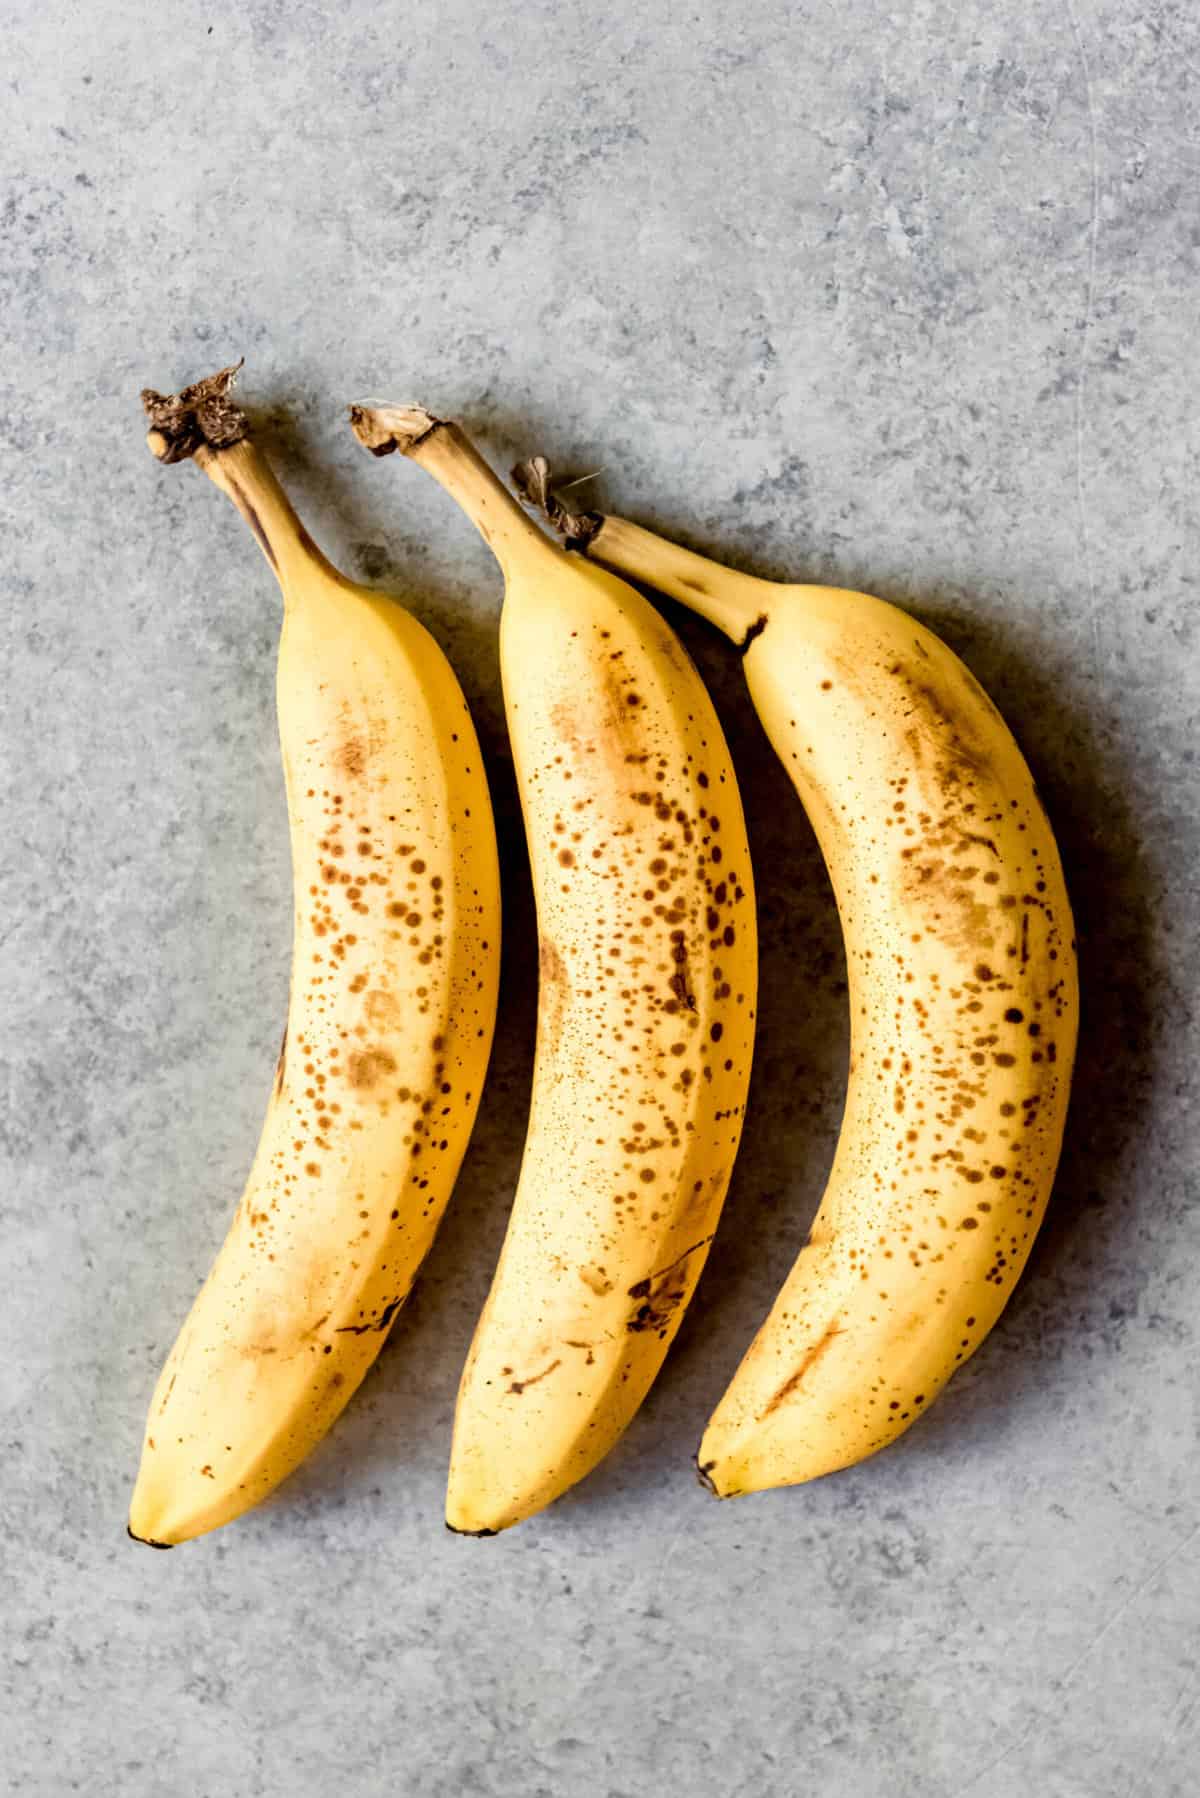 An image of 3 overripe bananas.